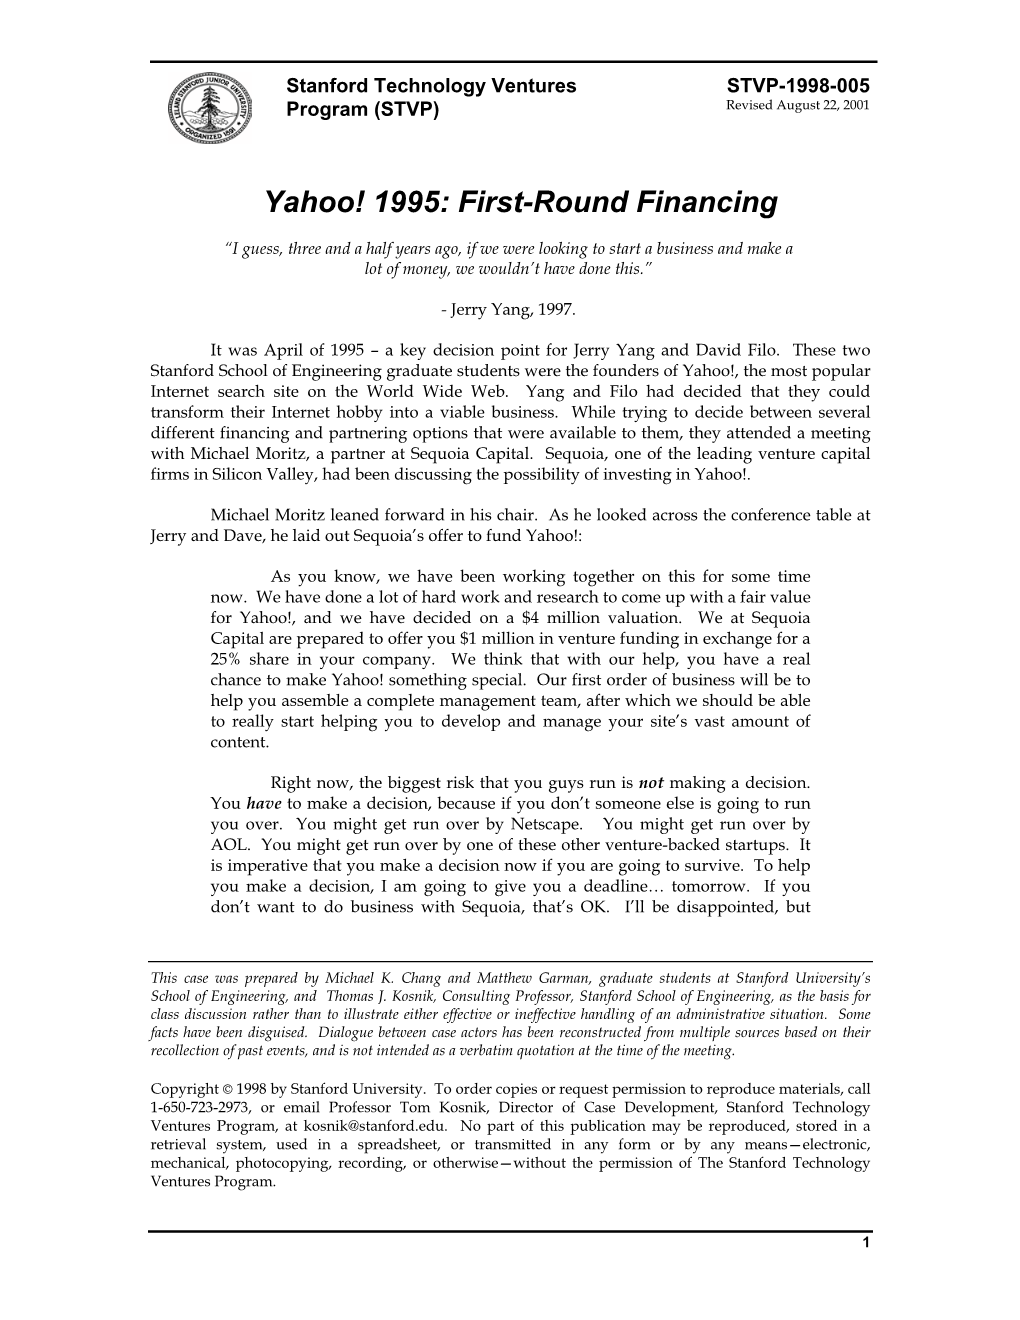 Yahoo! 1995: First-Round Financing